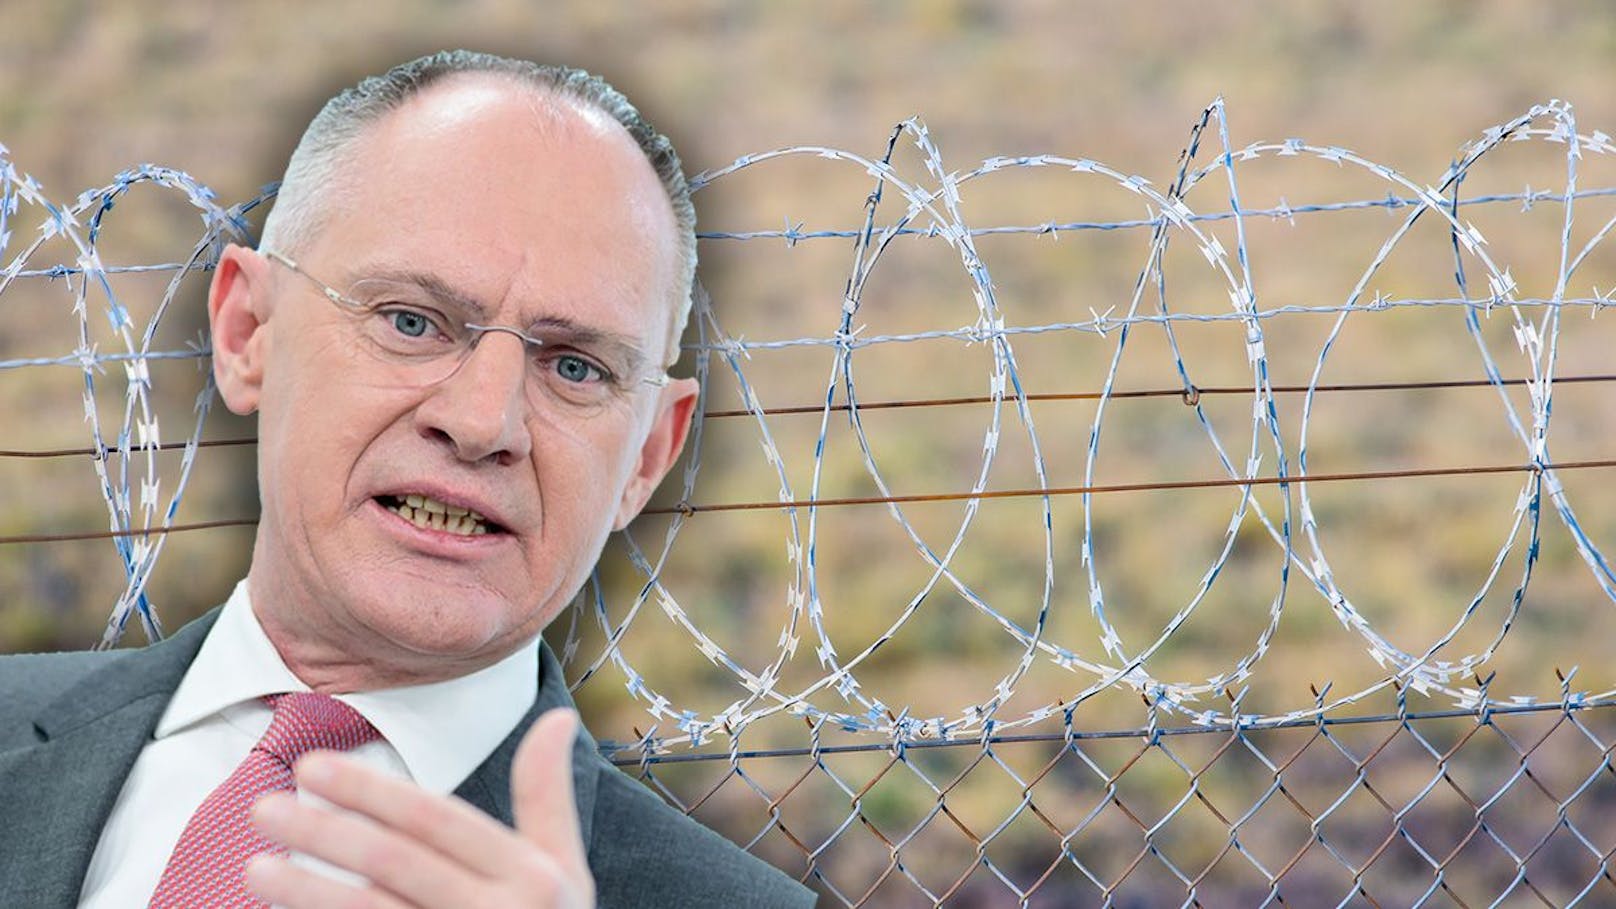 ÖVP-Minister Karner: "Illegale Migration muss auf Null"